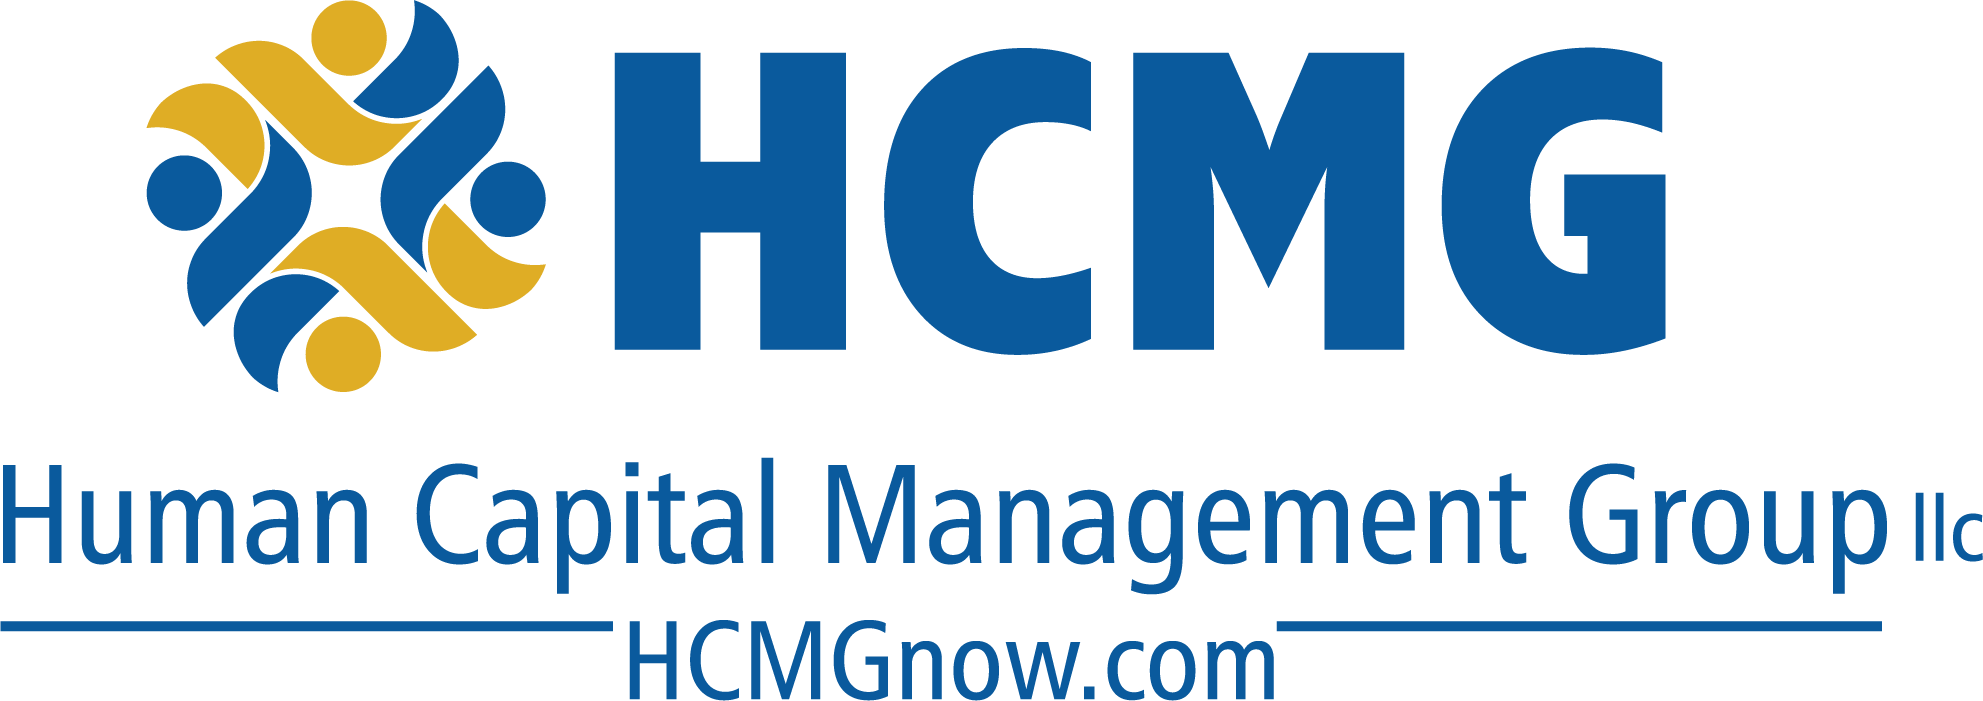 HCMG — Human Capital Management Group, LLC